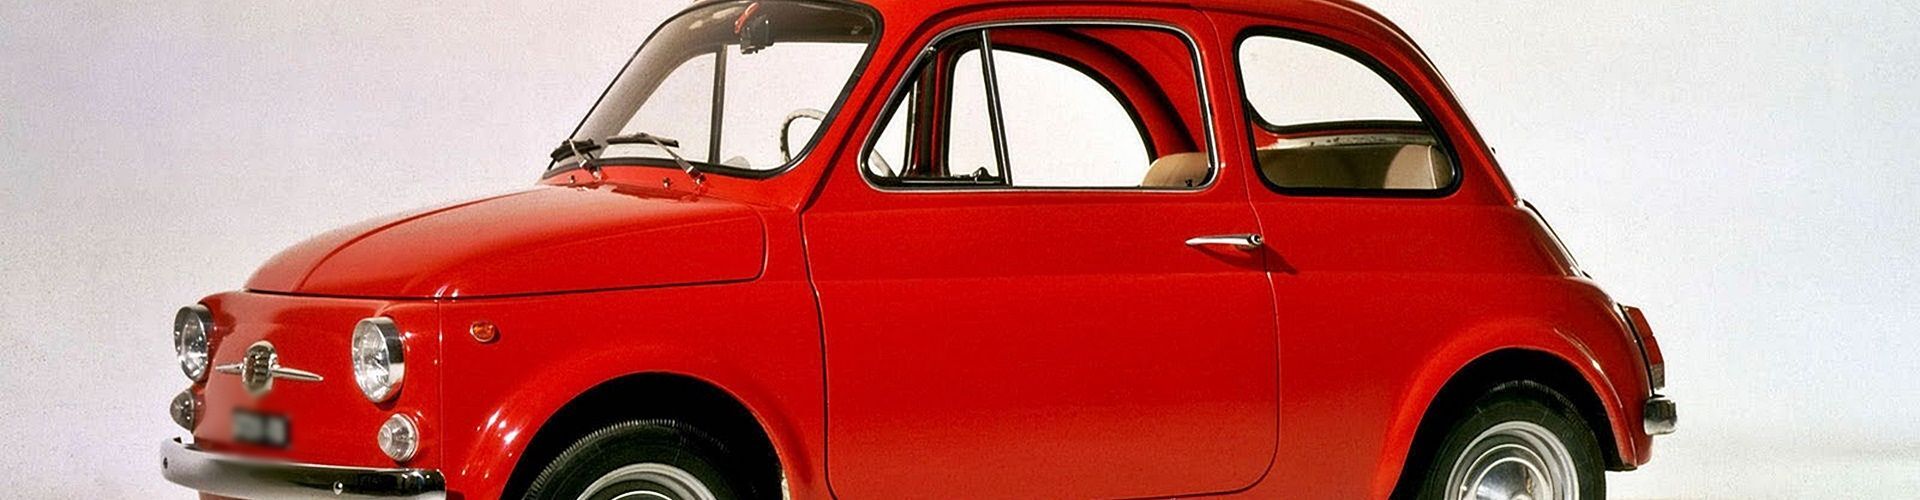 Sale a la venta de segunda mano el Fiat Nova 500 de 1968